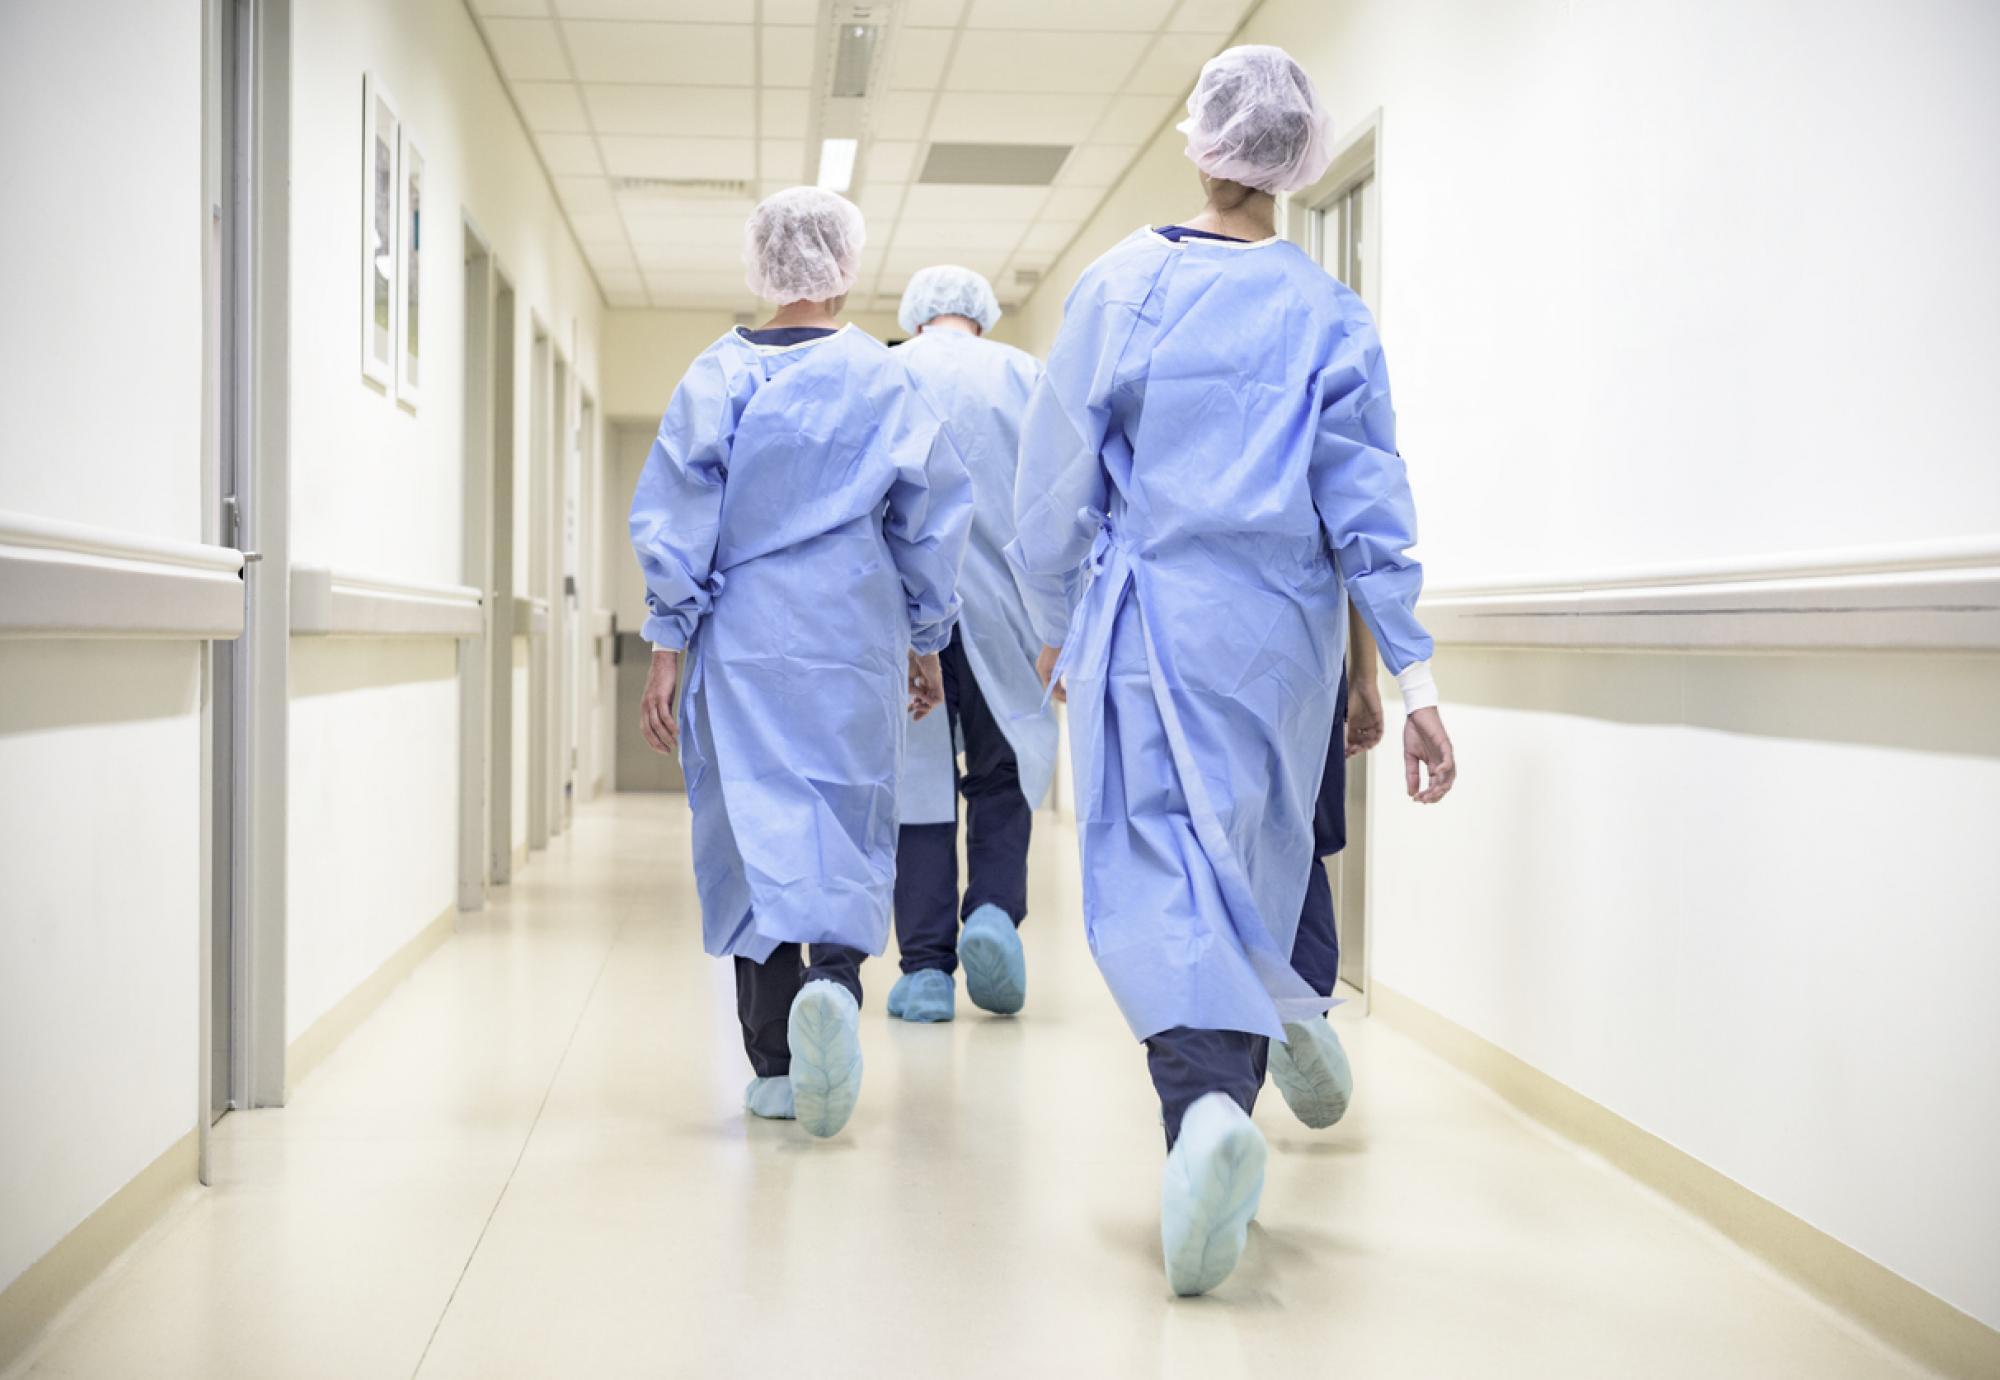 Medical staff walking through the corridor 